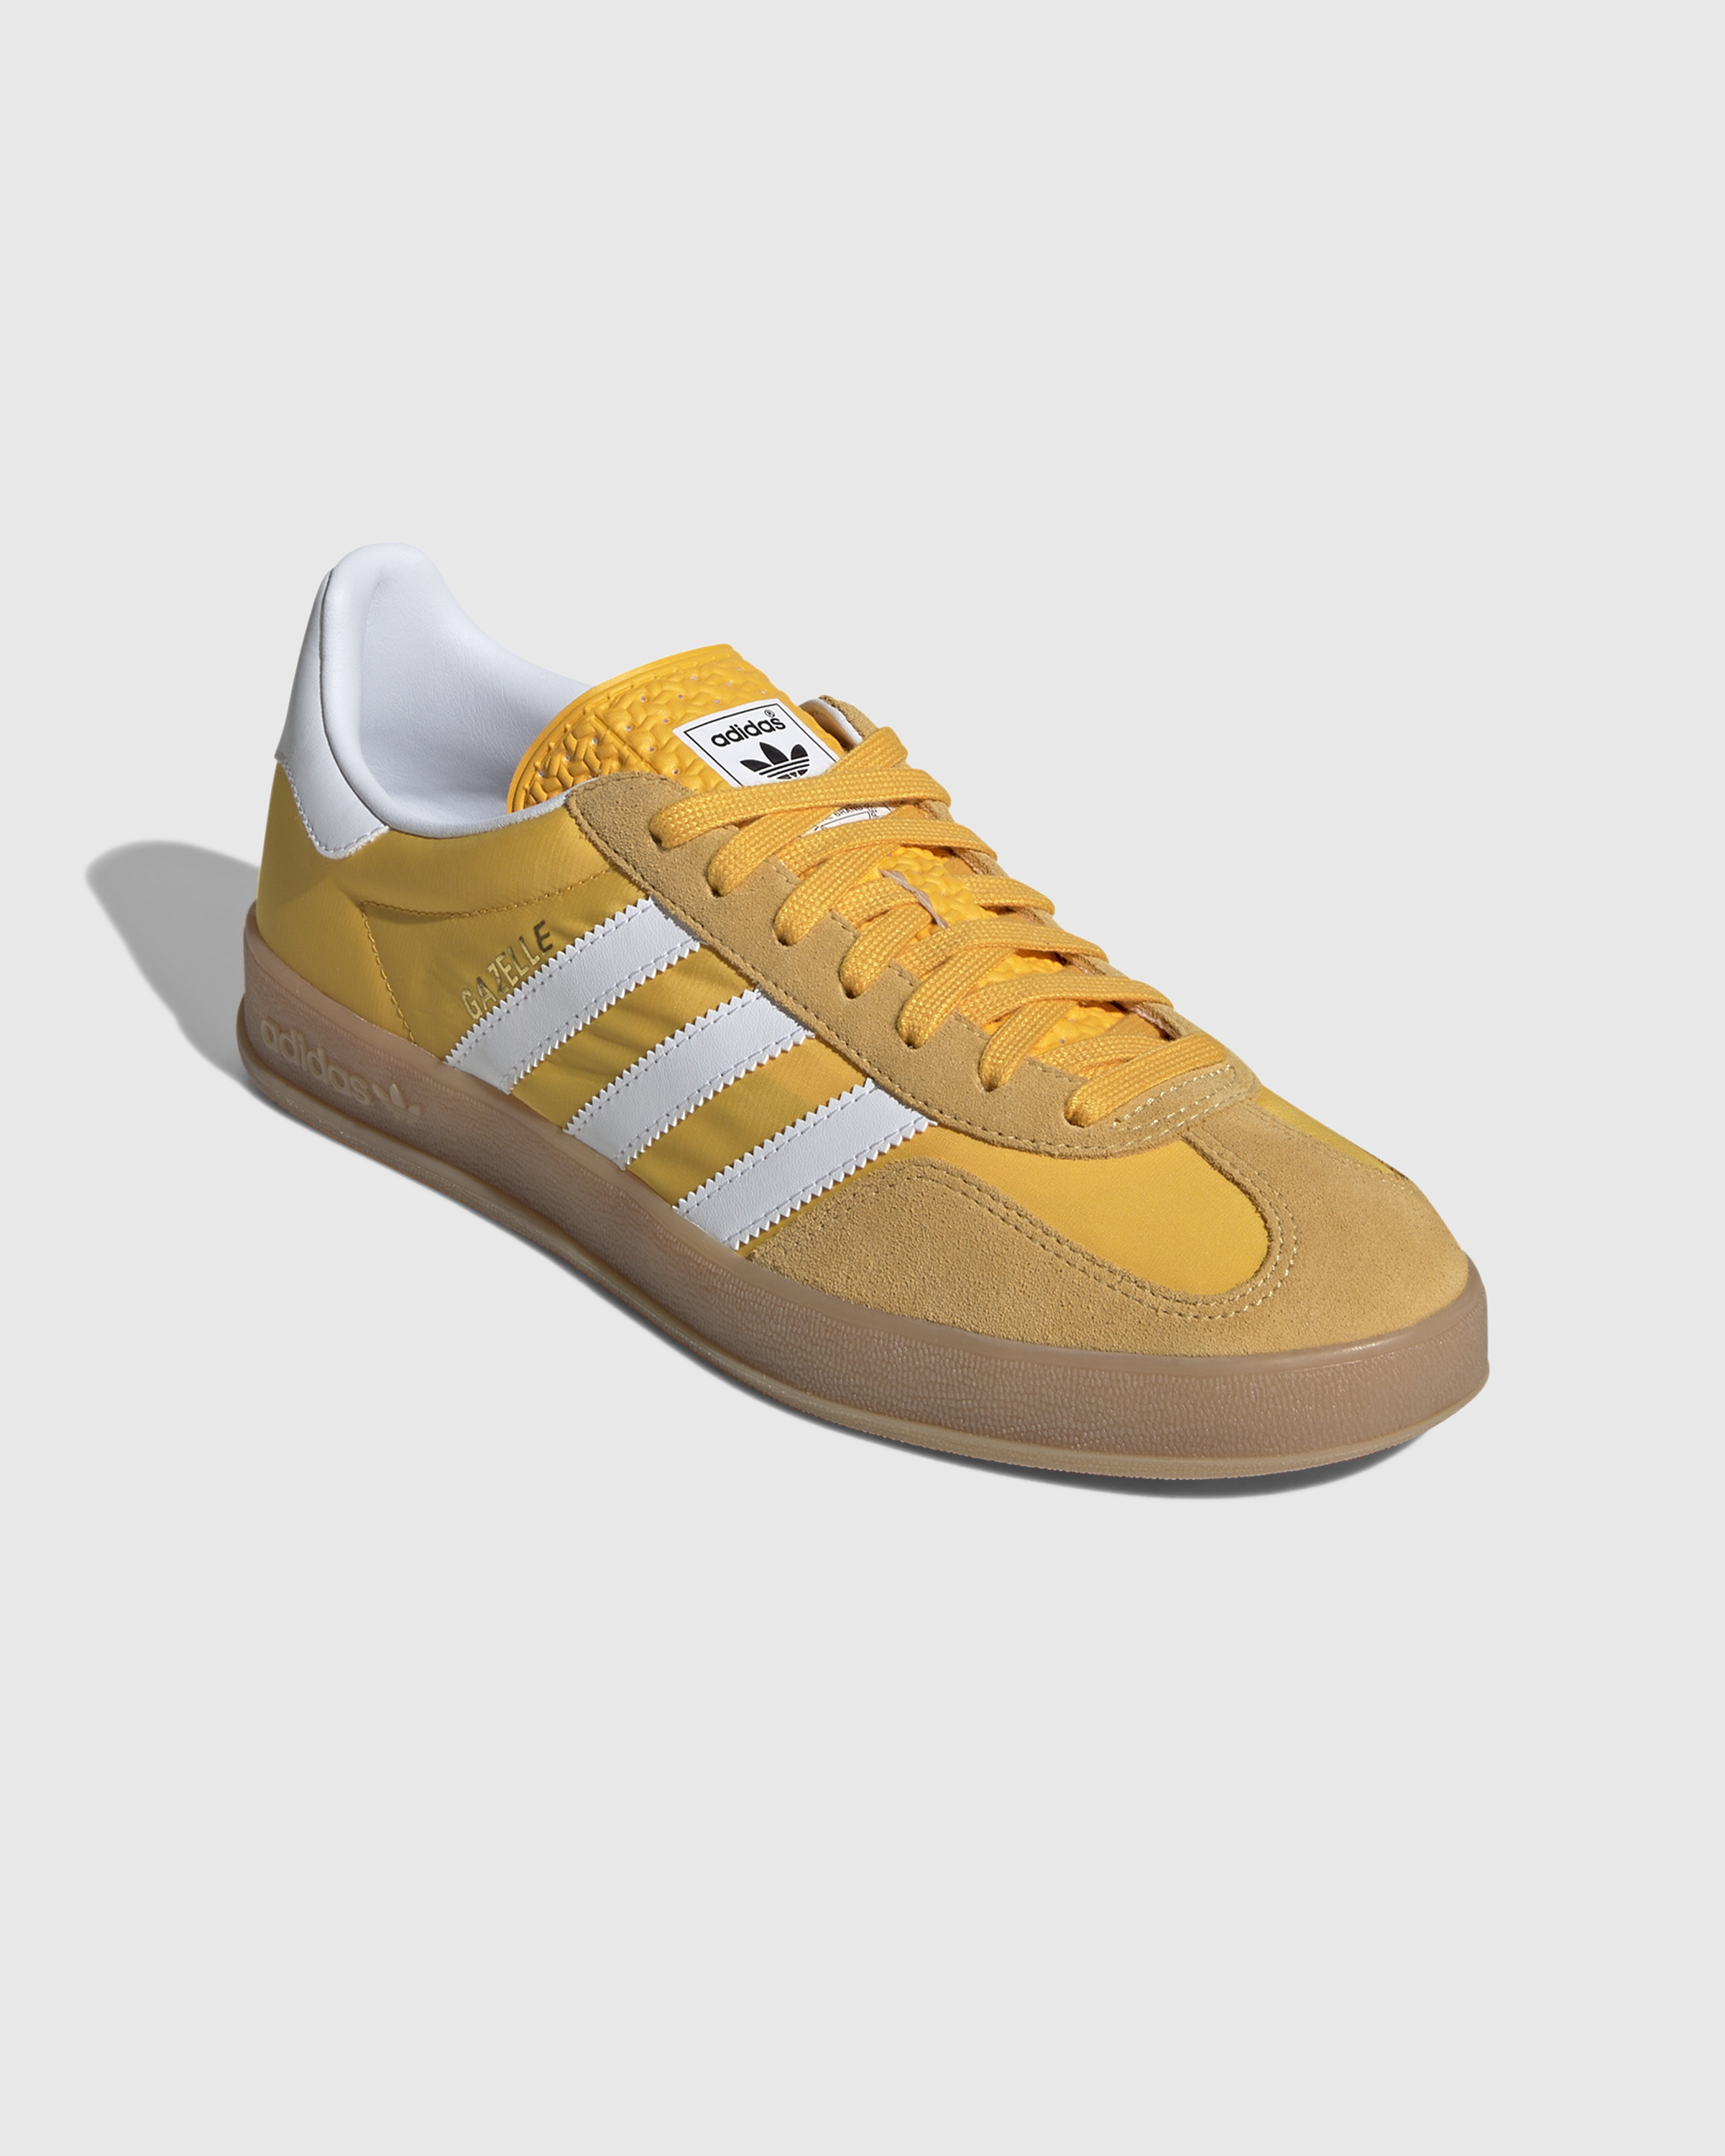 Adidas – Gazelle Indoor Yellow/White - Low Top Sneakers - Yellow - Image 3